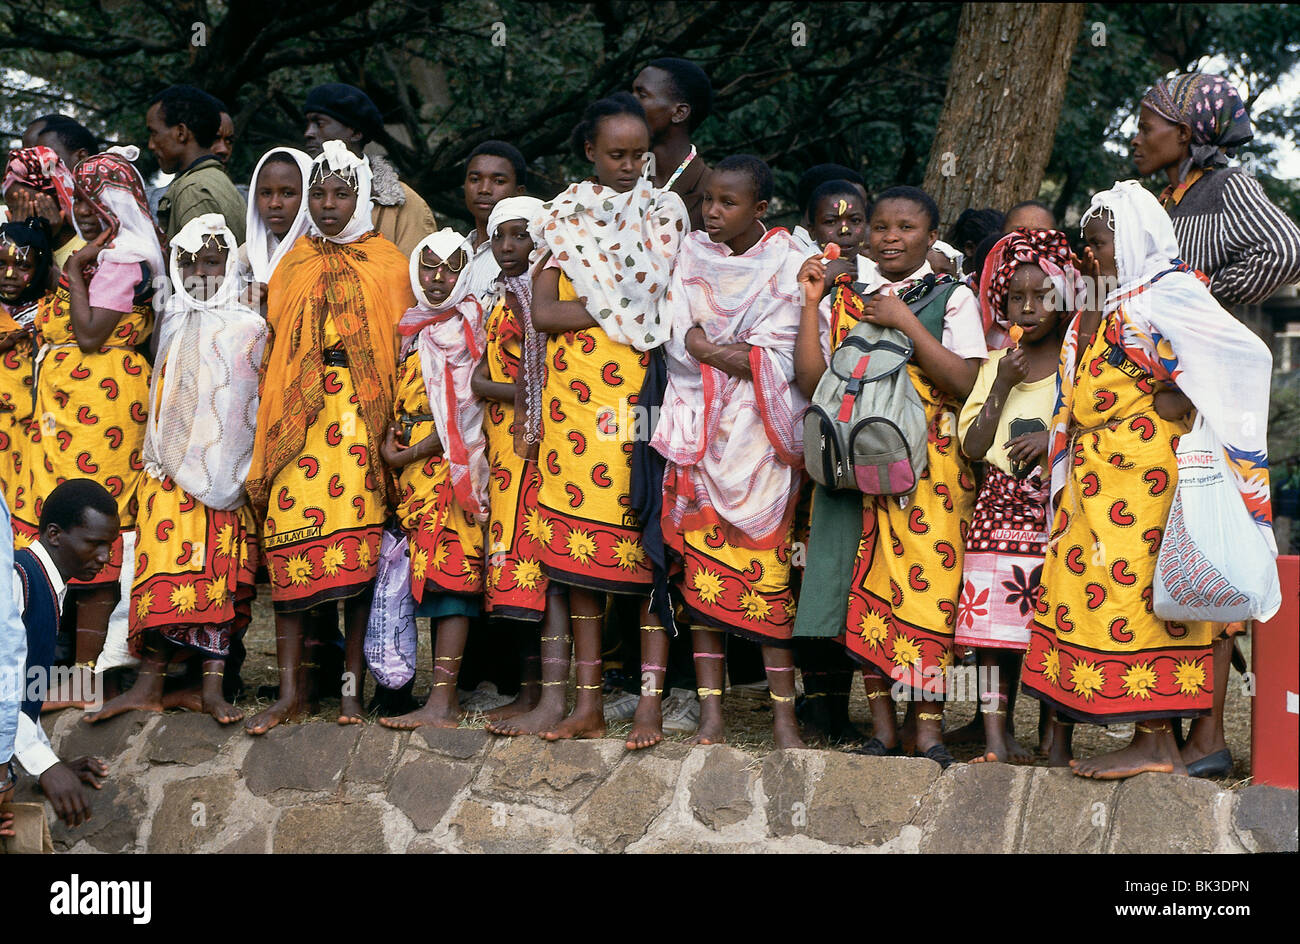 Kenyan children and adults in traditional clothing, Nairobi, Kenya Stock Photo